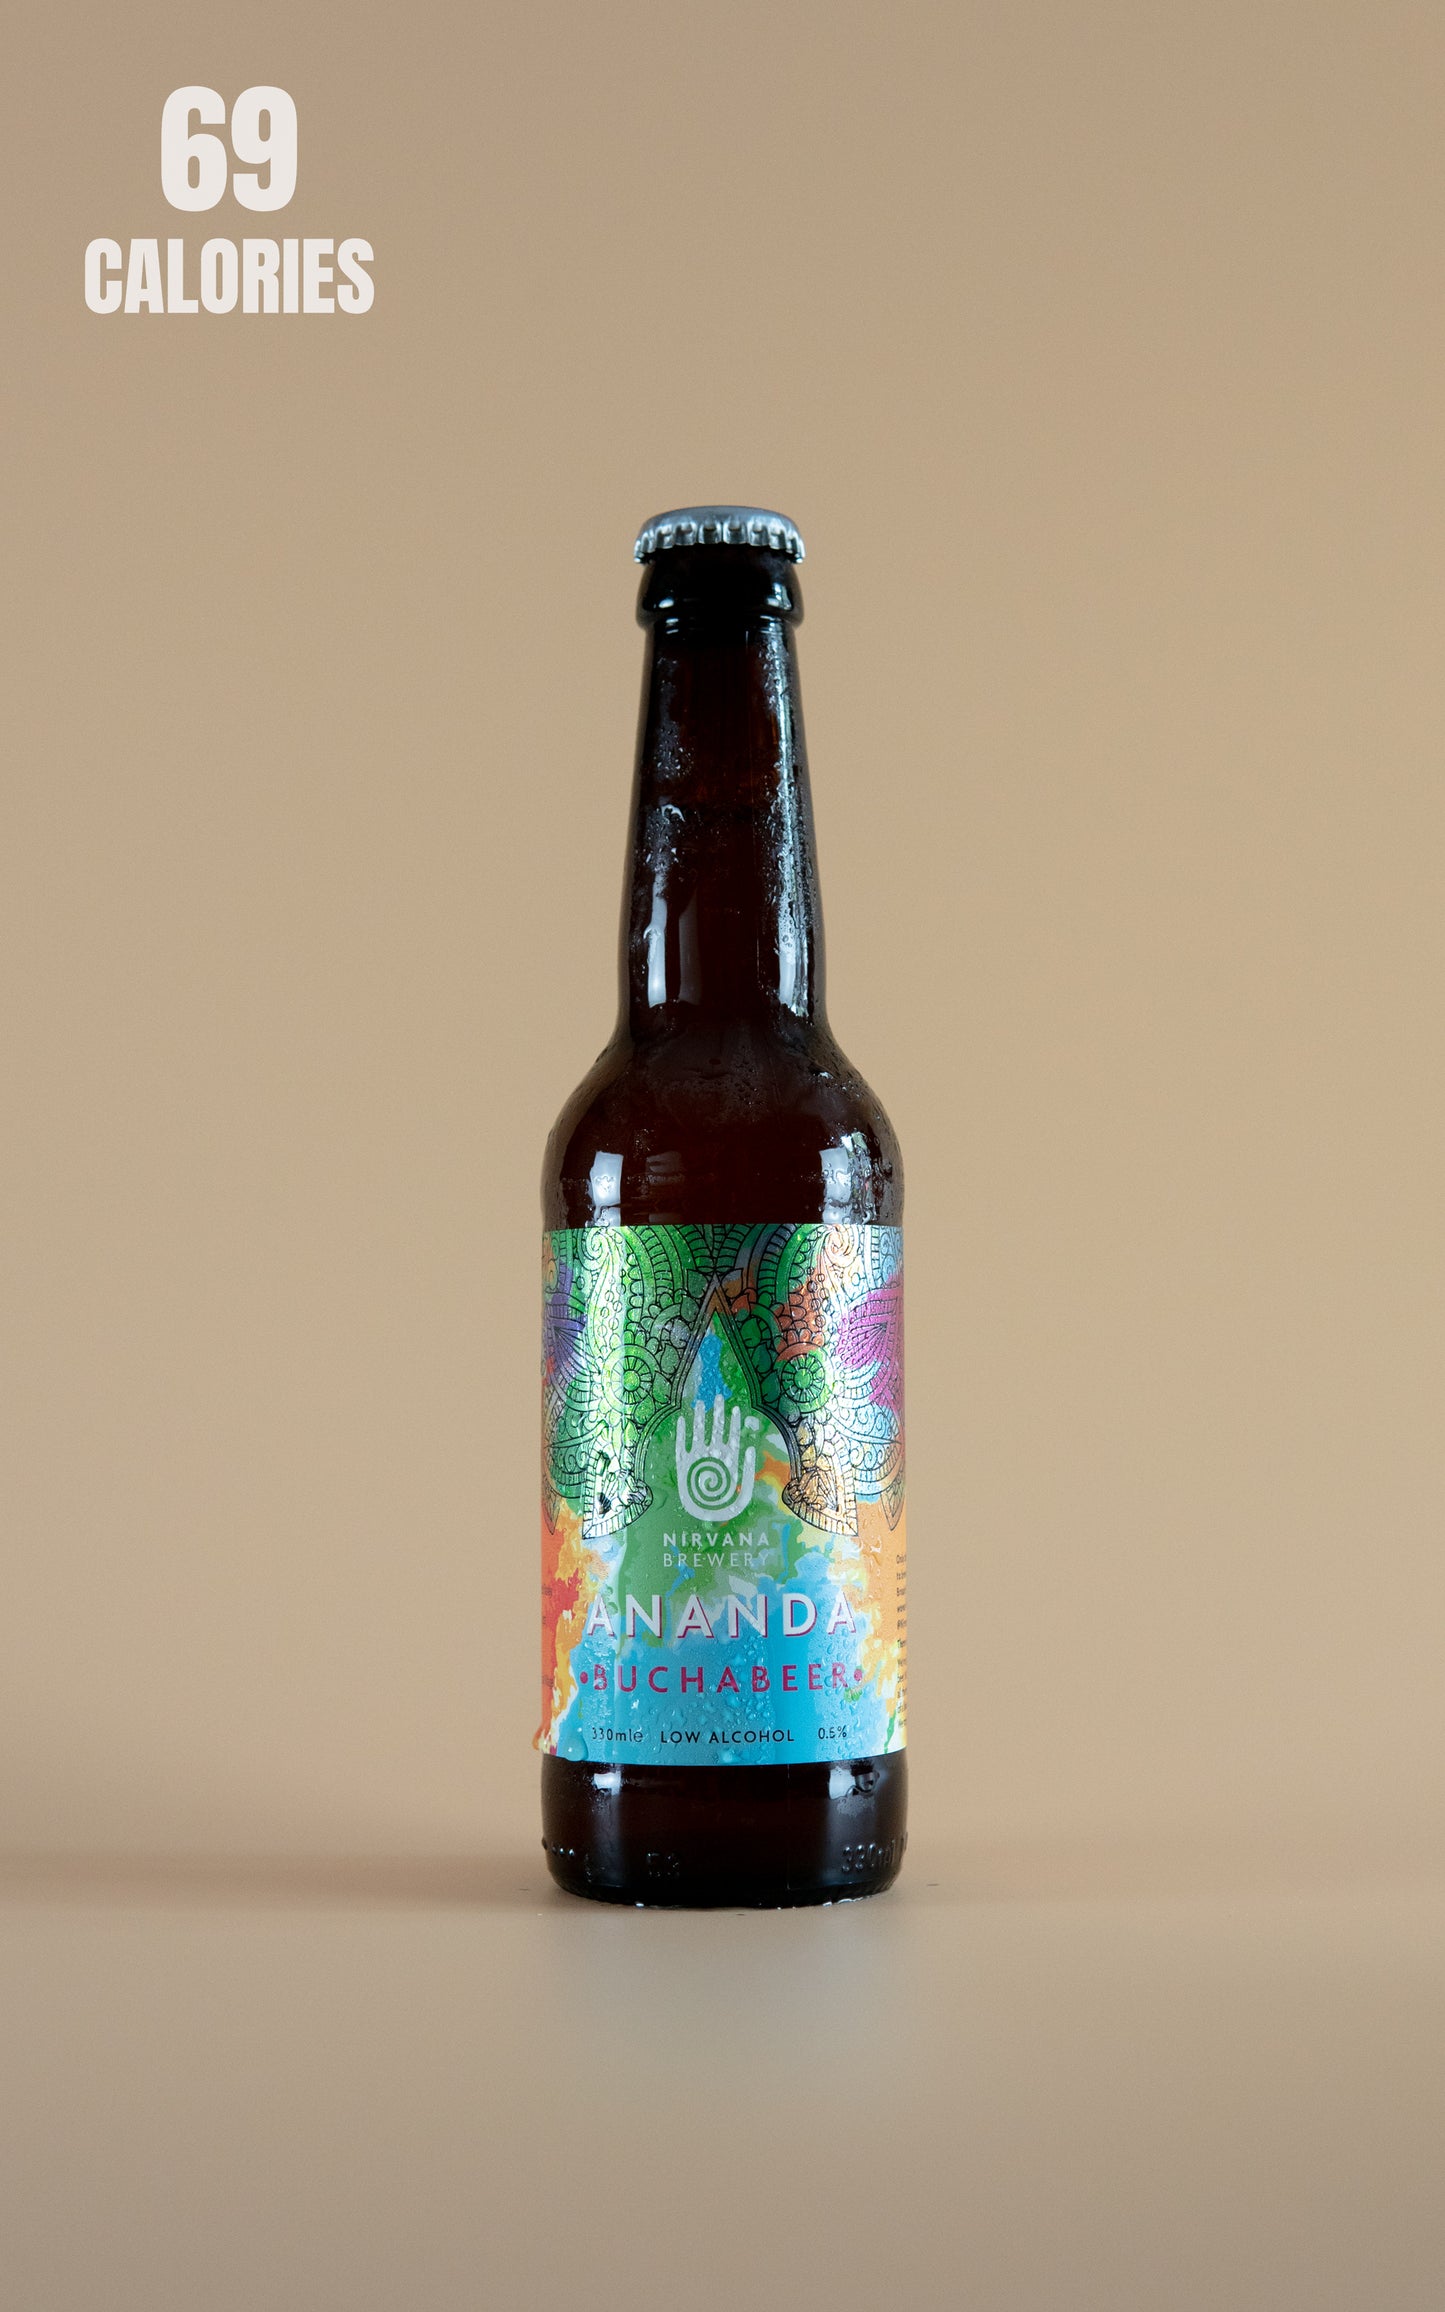 Nirvana Brewery Ananda Buchabeer 0.5% - 330ml - LightDrinks